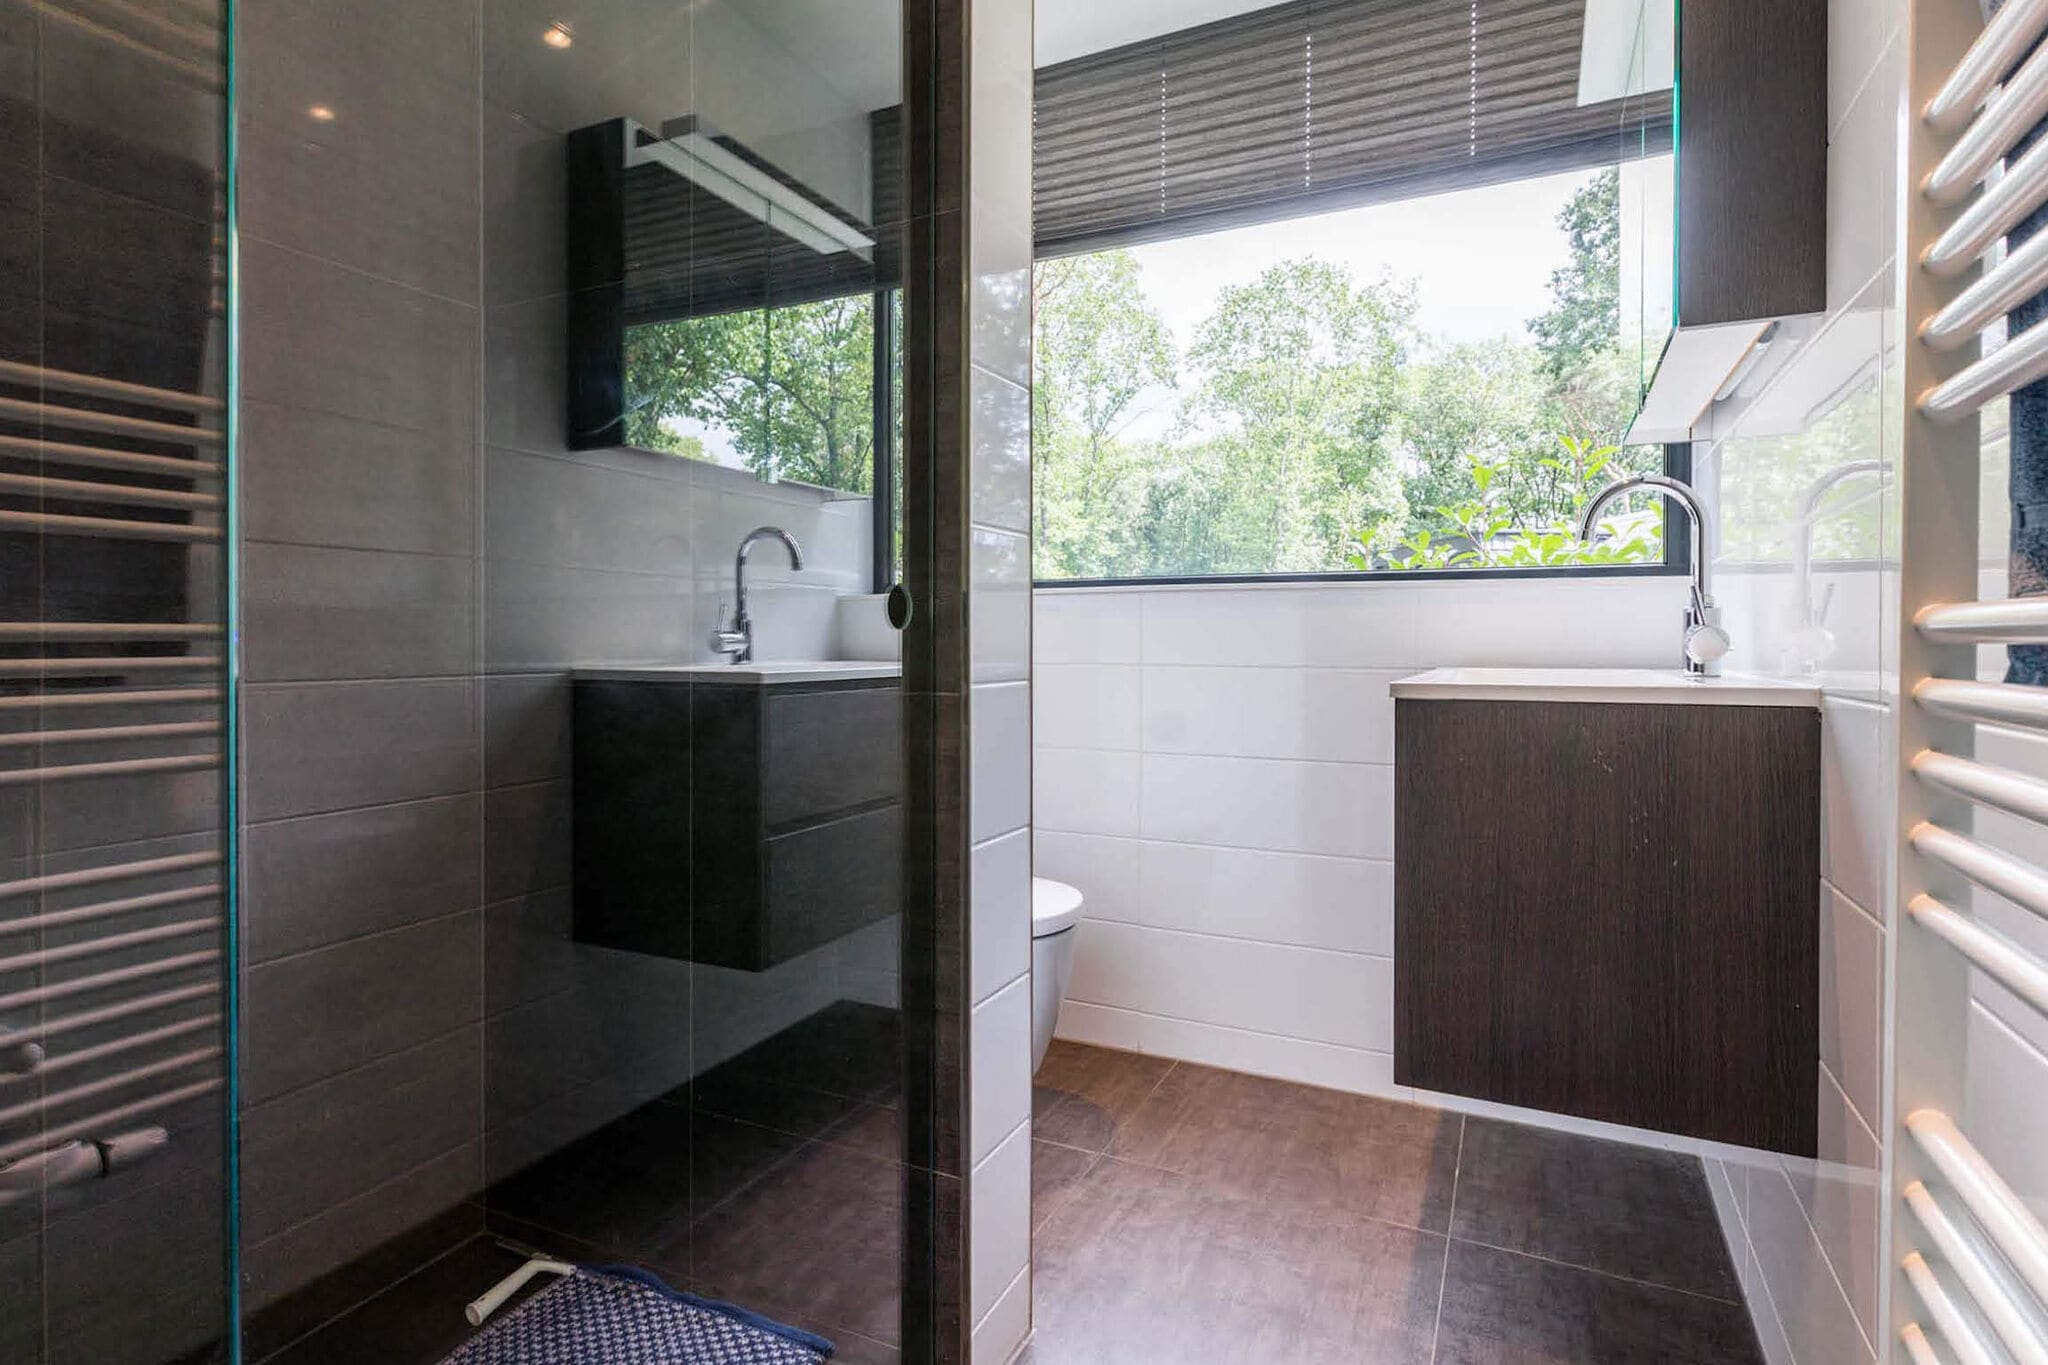 Modern, luxury villa with sauna and spa